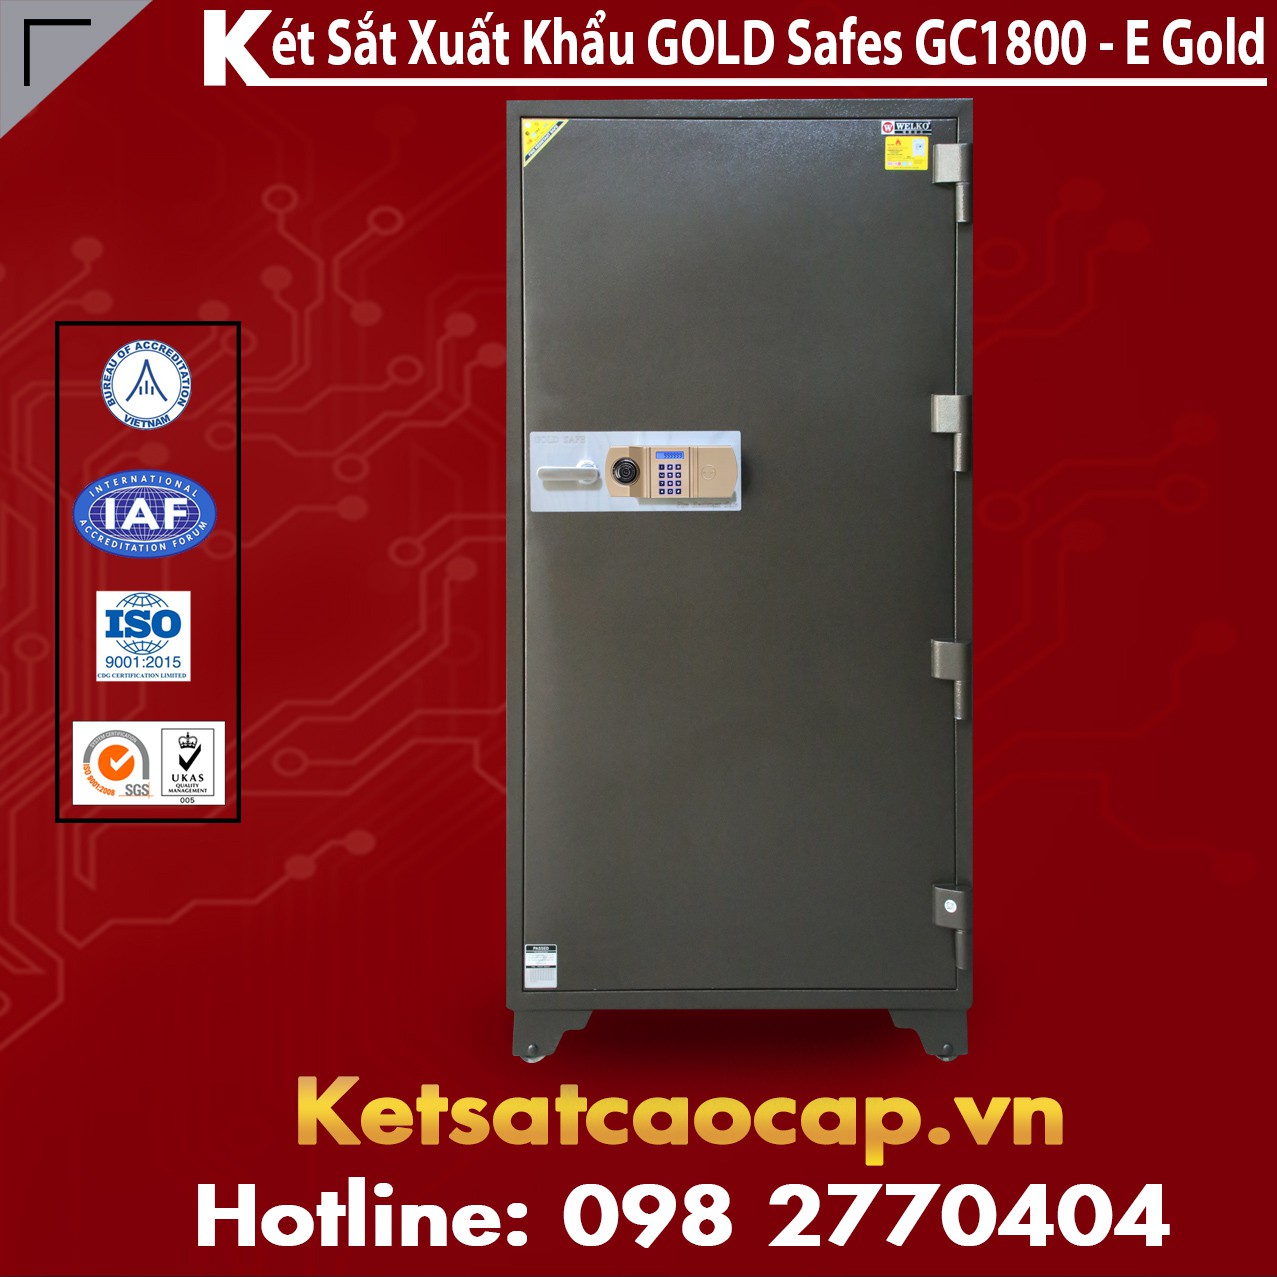 Két Sắt Thịnh Vượng GOLD SAFES GC1800 E Gold